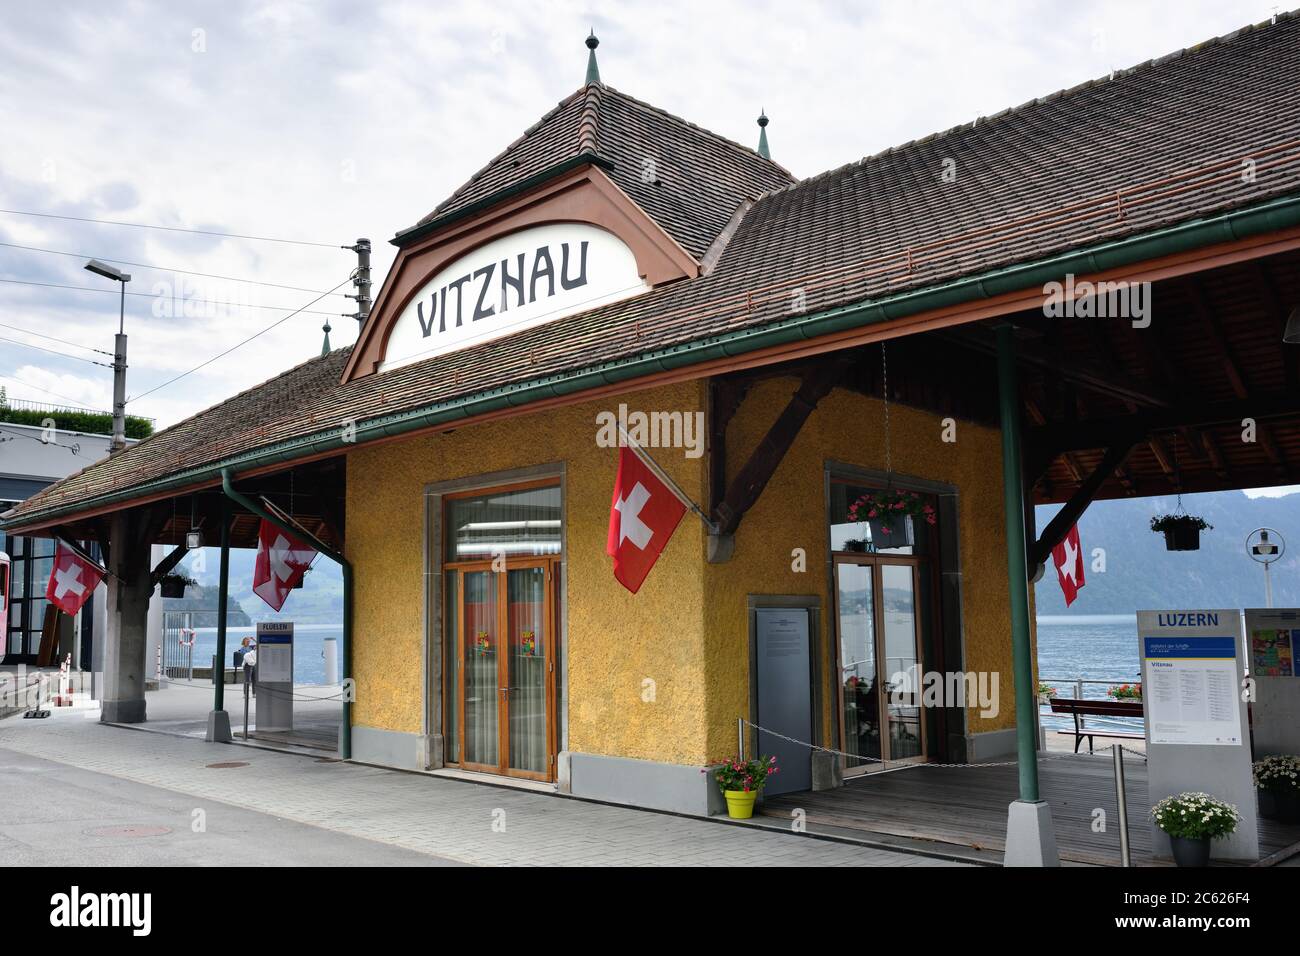 Vitznau, Switzerland - June 14, 2017: The Vitznau station on the coast of the Lucerne lake, popular tourist destination and point to start water cruis Stock Photo